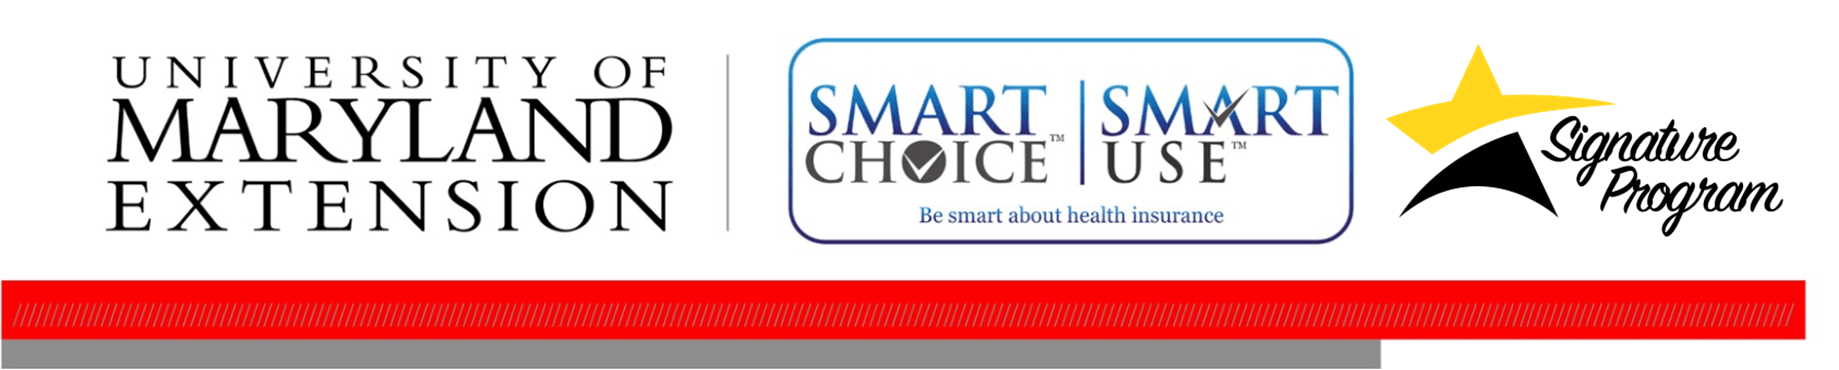 Publication Header with UME, Smart Choice-Smart Use, Signature Program logos